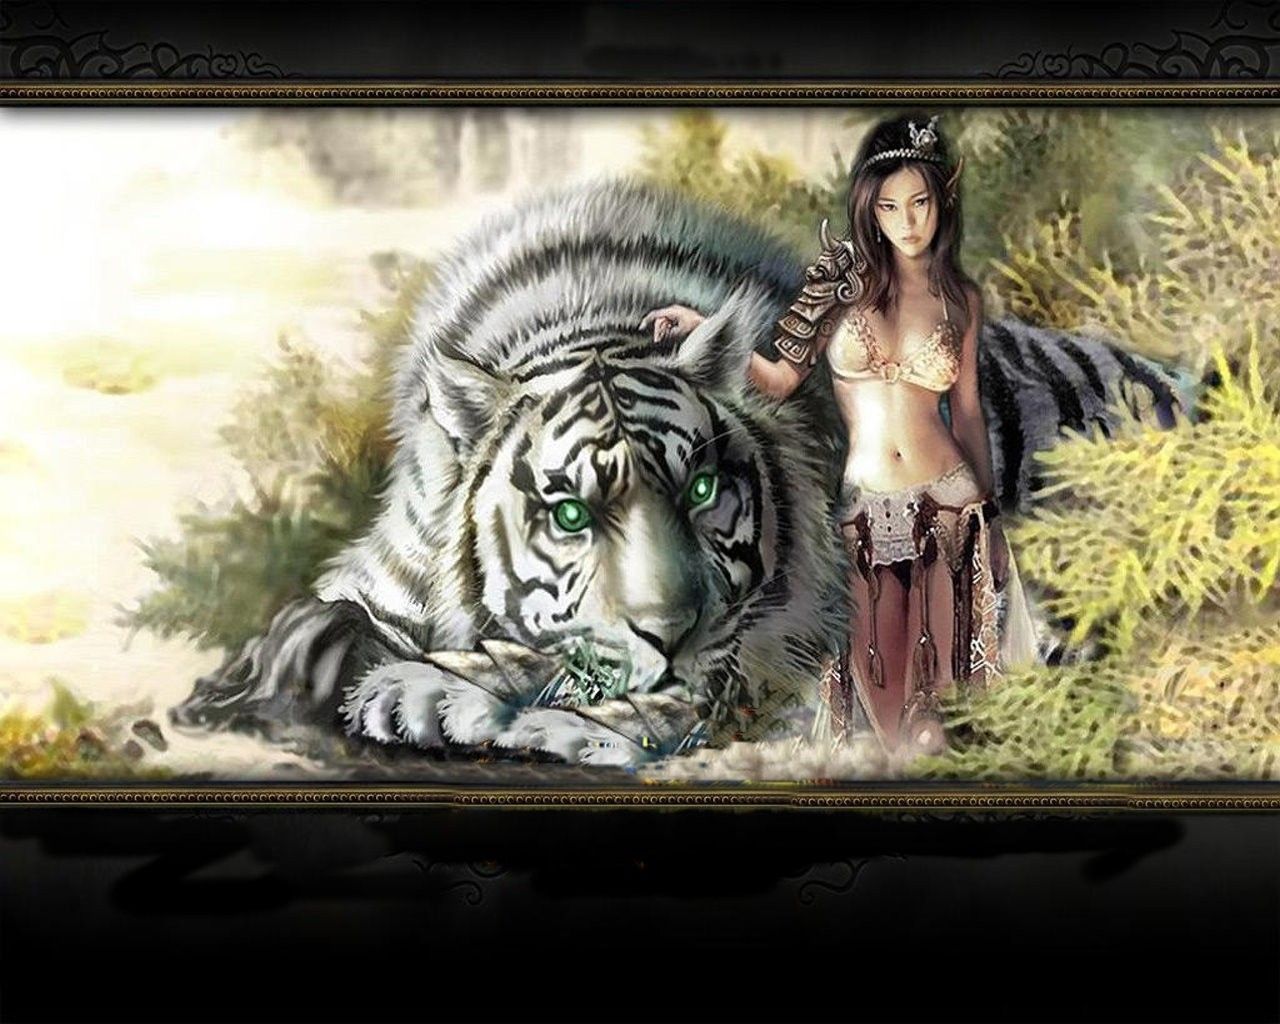 women fantasy tigers 1280x1024 wallpaper High Quality Wallpaper, High Definition Wallpaper